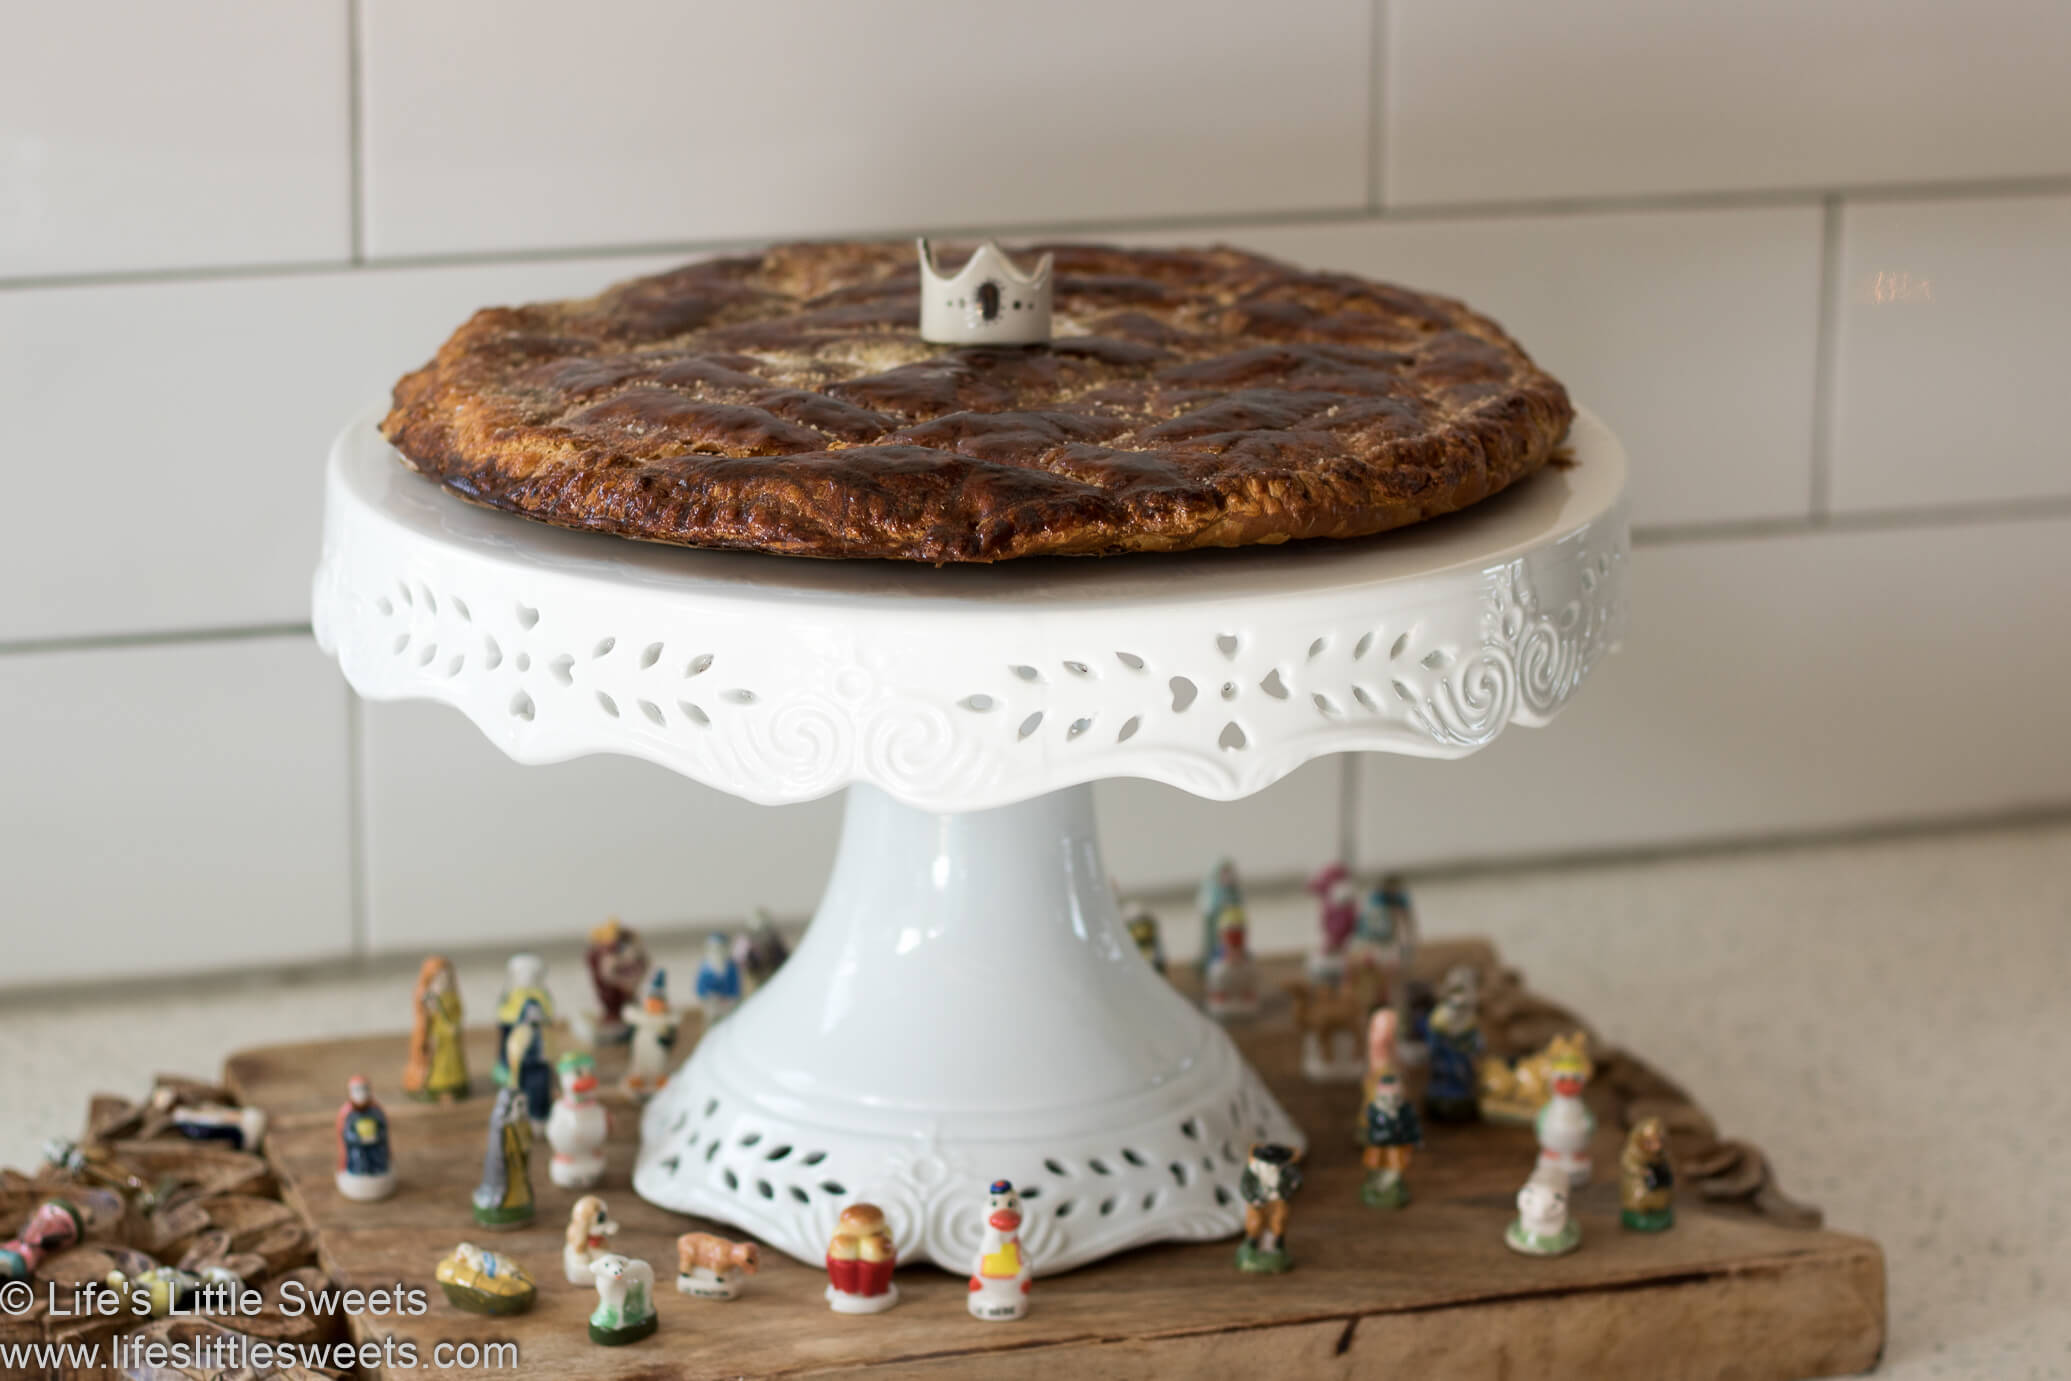 Galette Des Rois (King Cake)